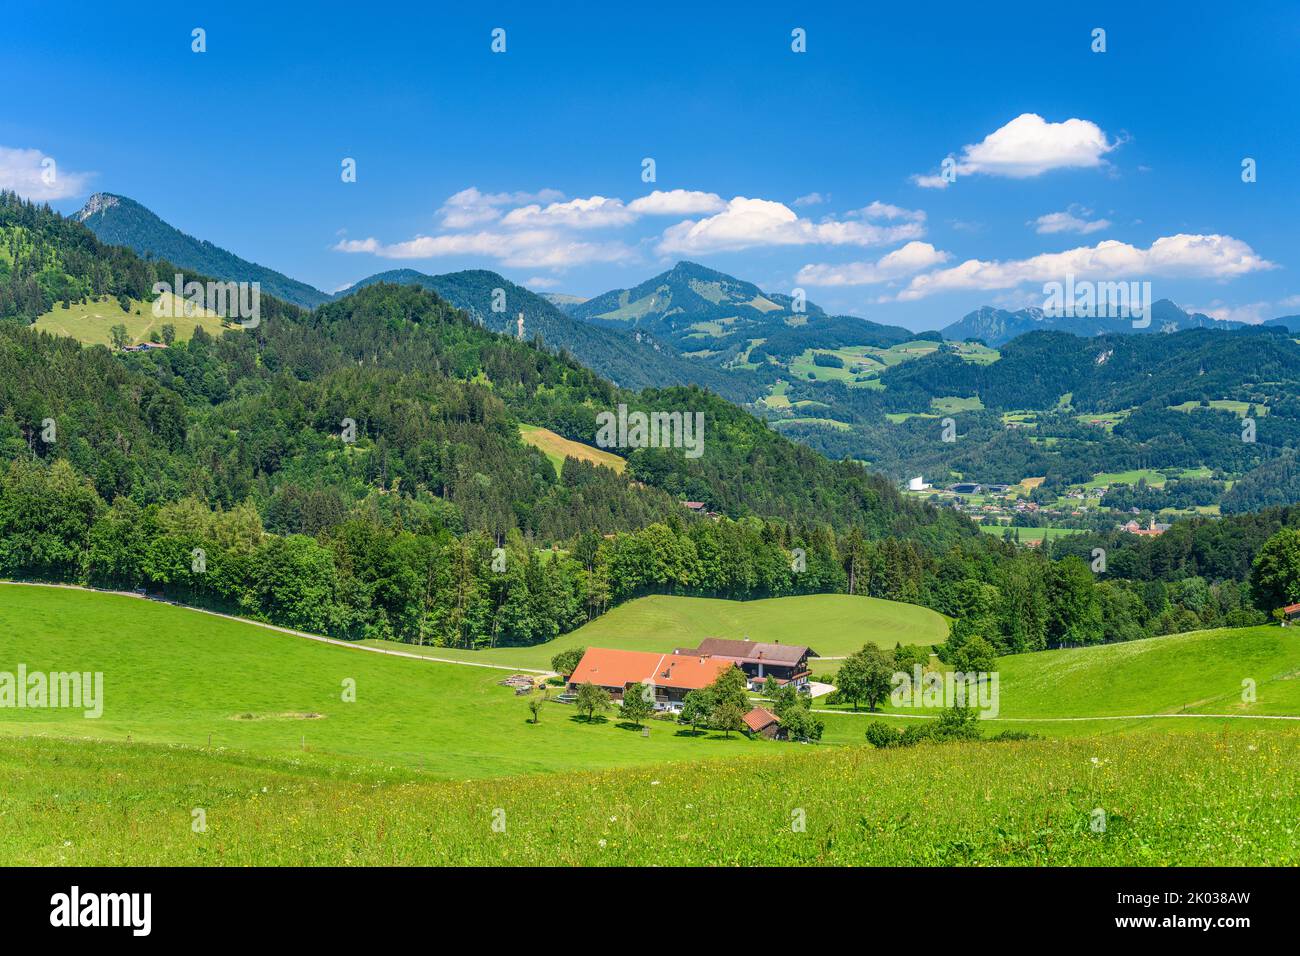 Germany, Bavaria, county Rosenheim, Oberaudorf, Zimmerau, view over Inntal valley against Chiemgau Alps Stock Photo